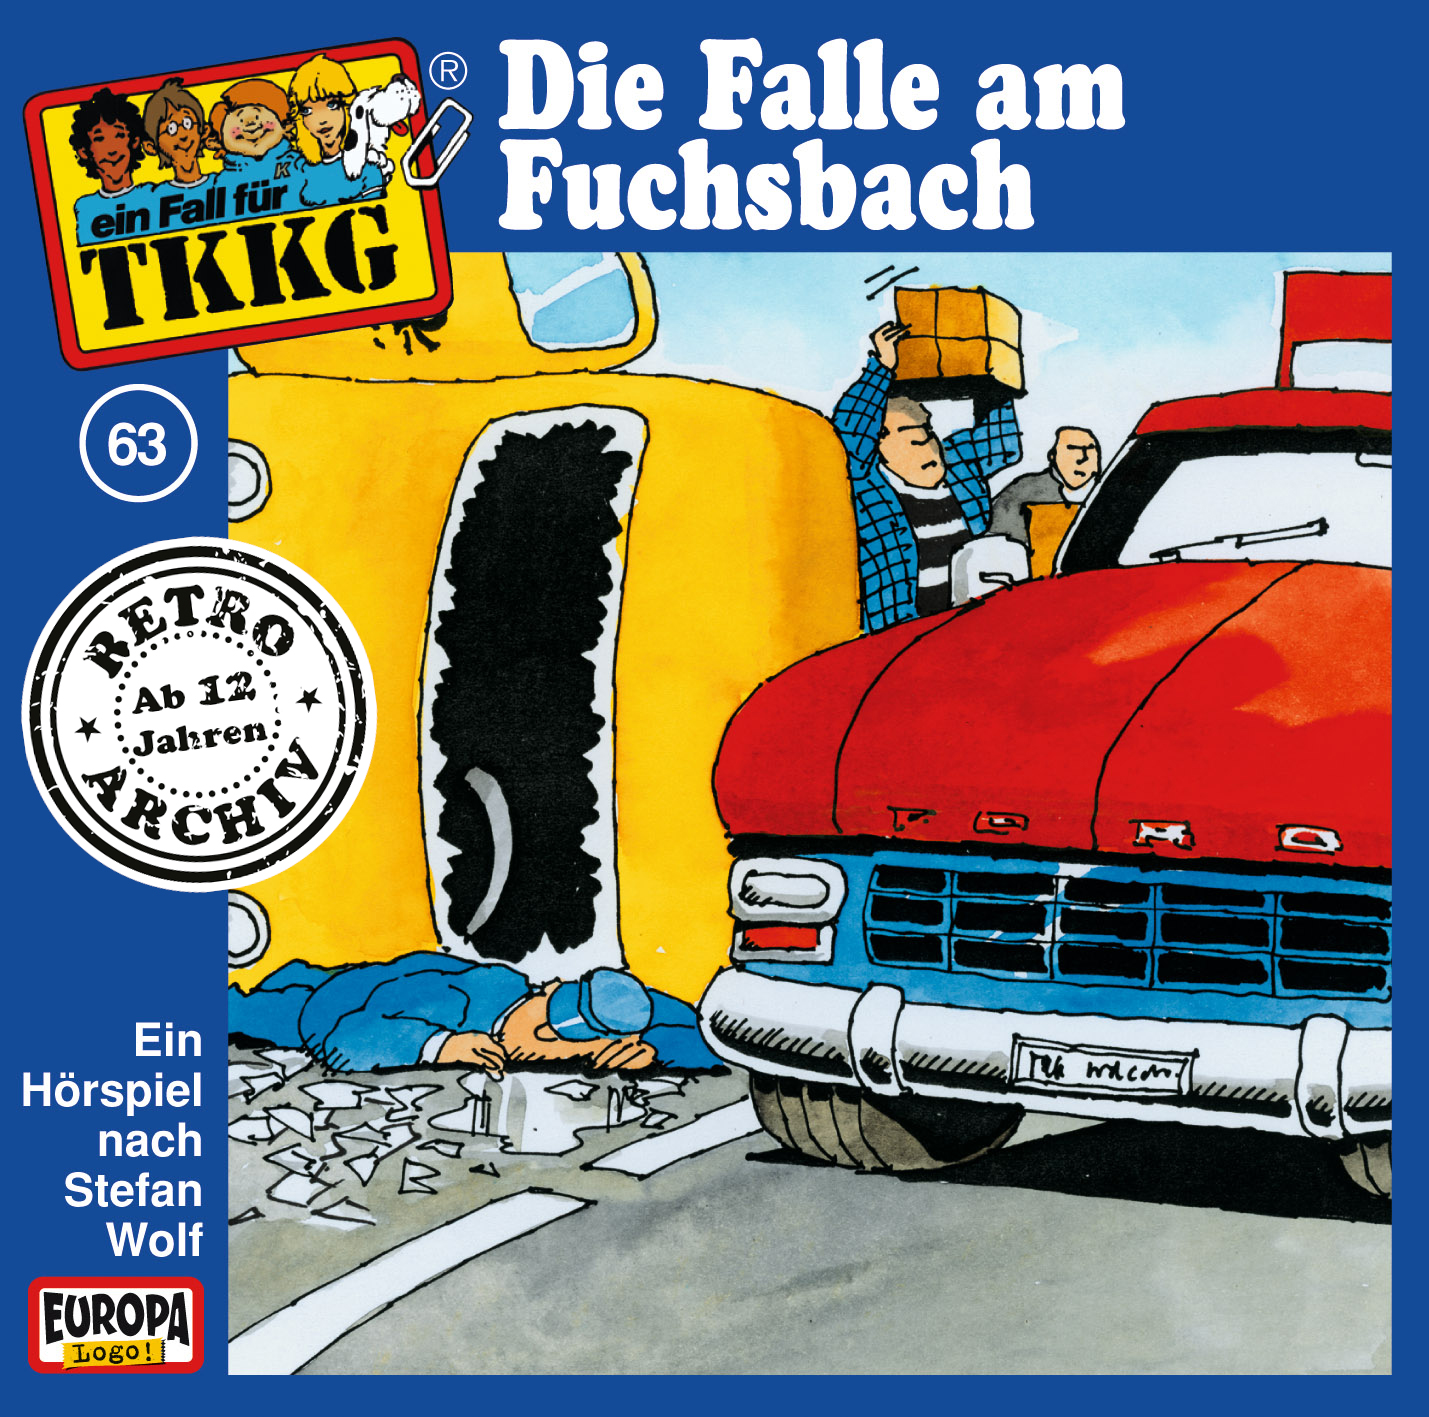 TKKG Retro-Archiv - Die Falle am Fuchsbach